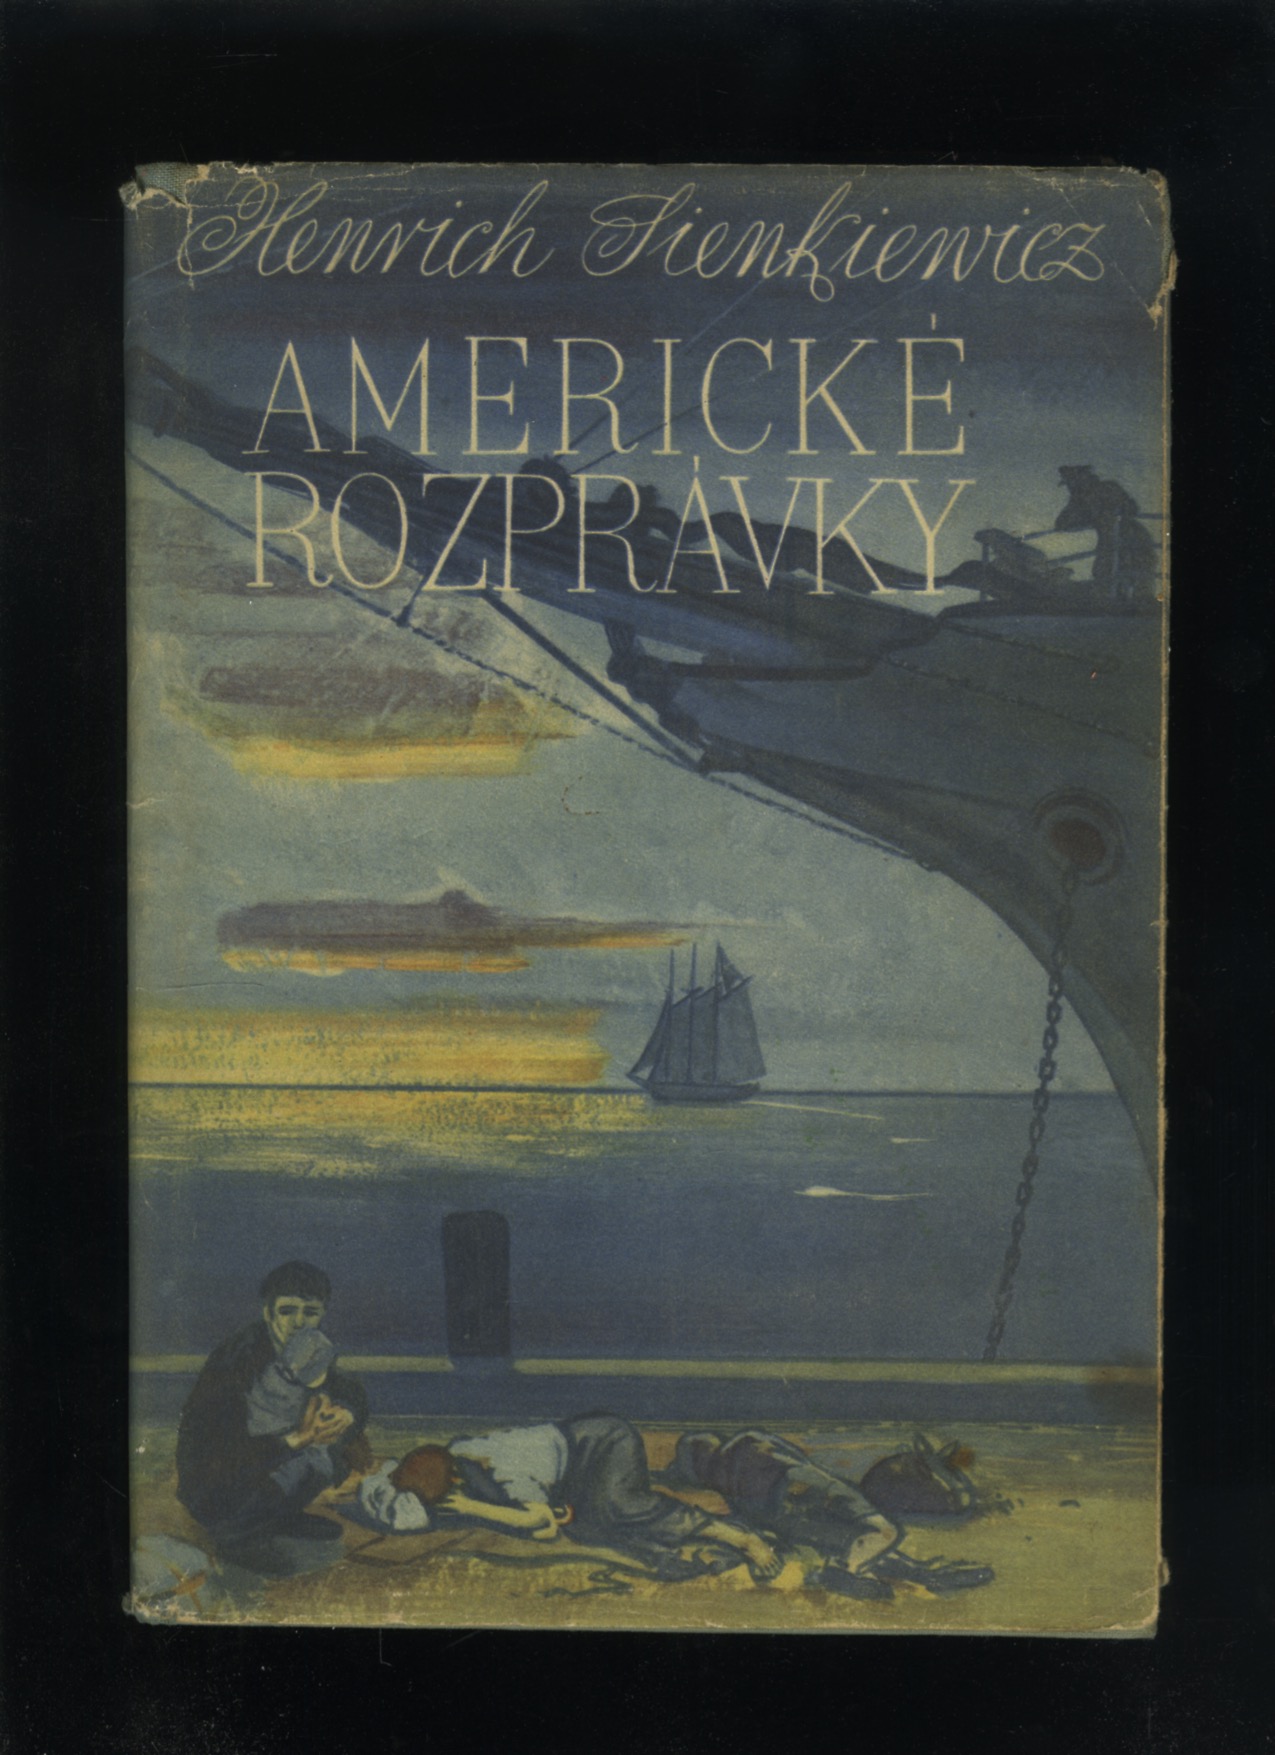 Americké rozprávky (Henryk Sienkiewicz)